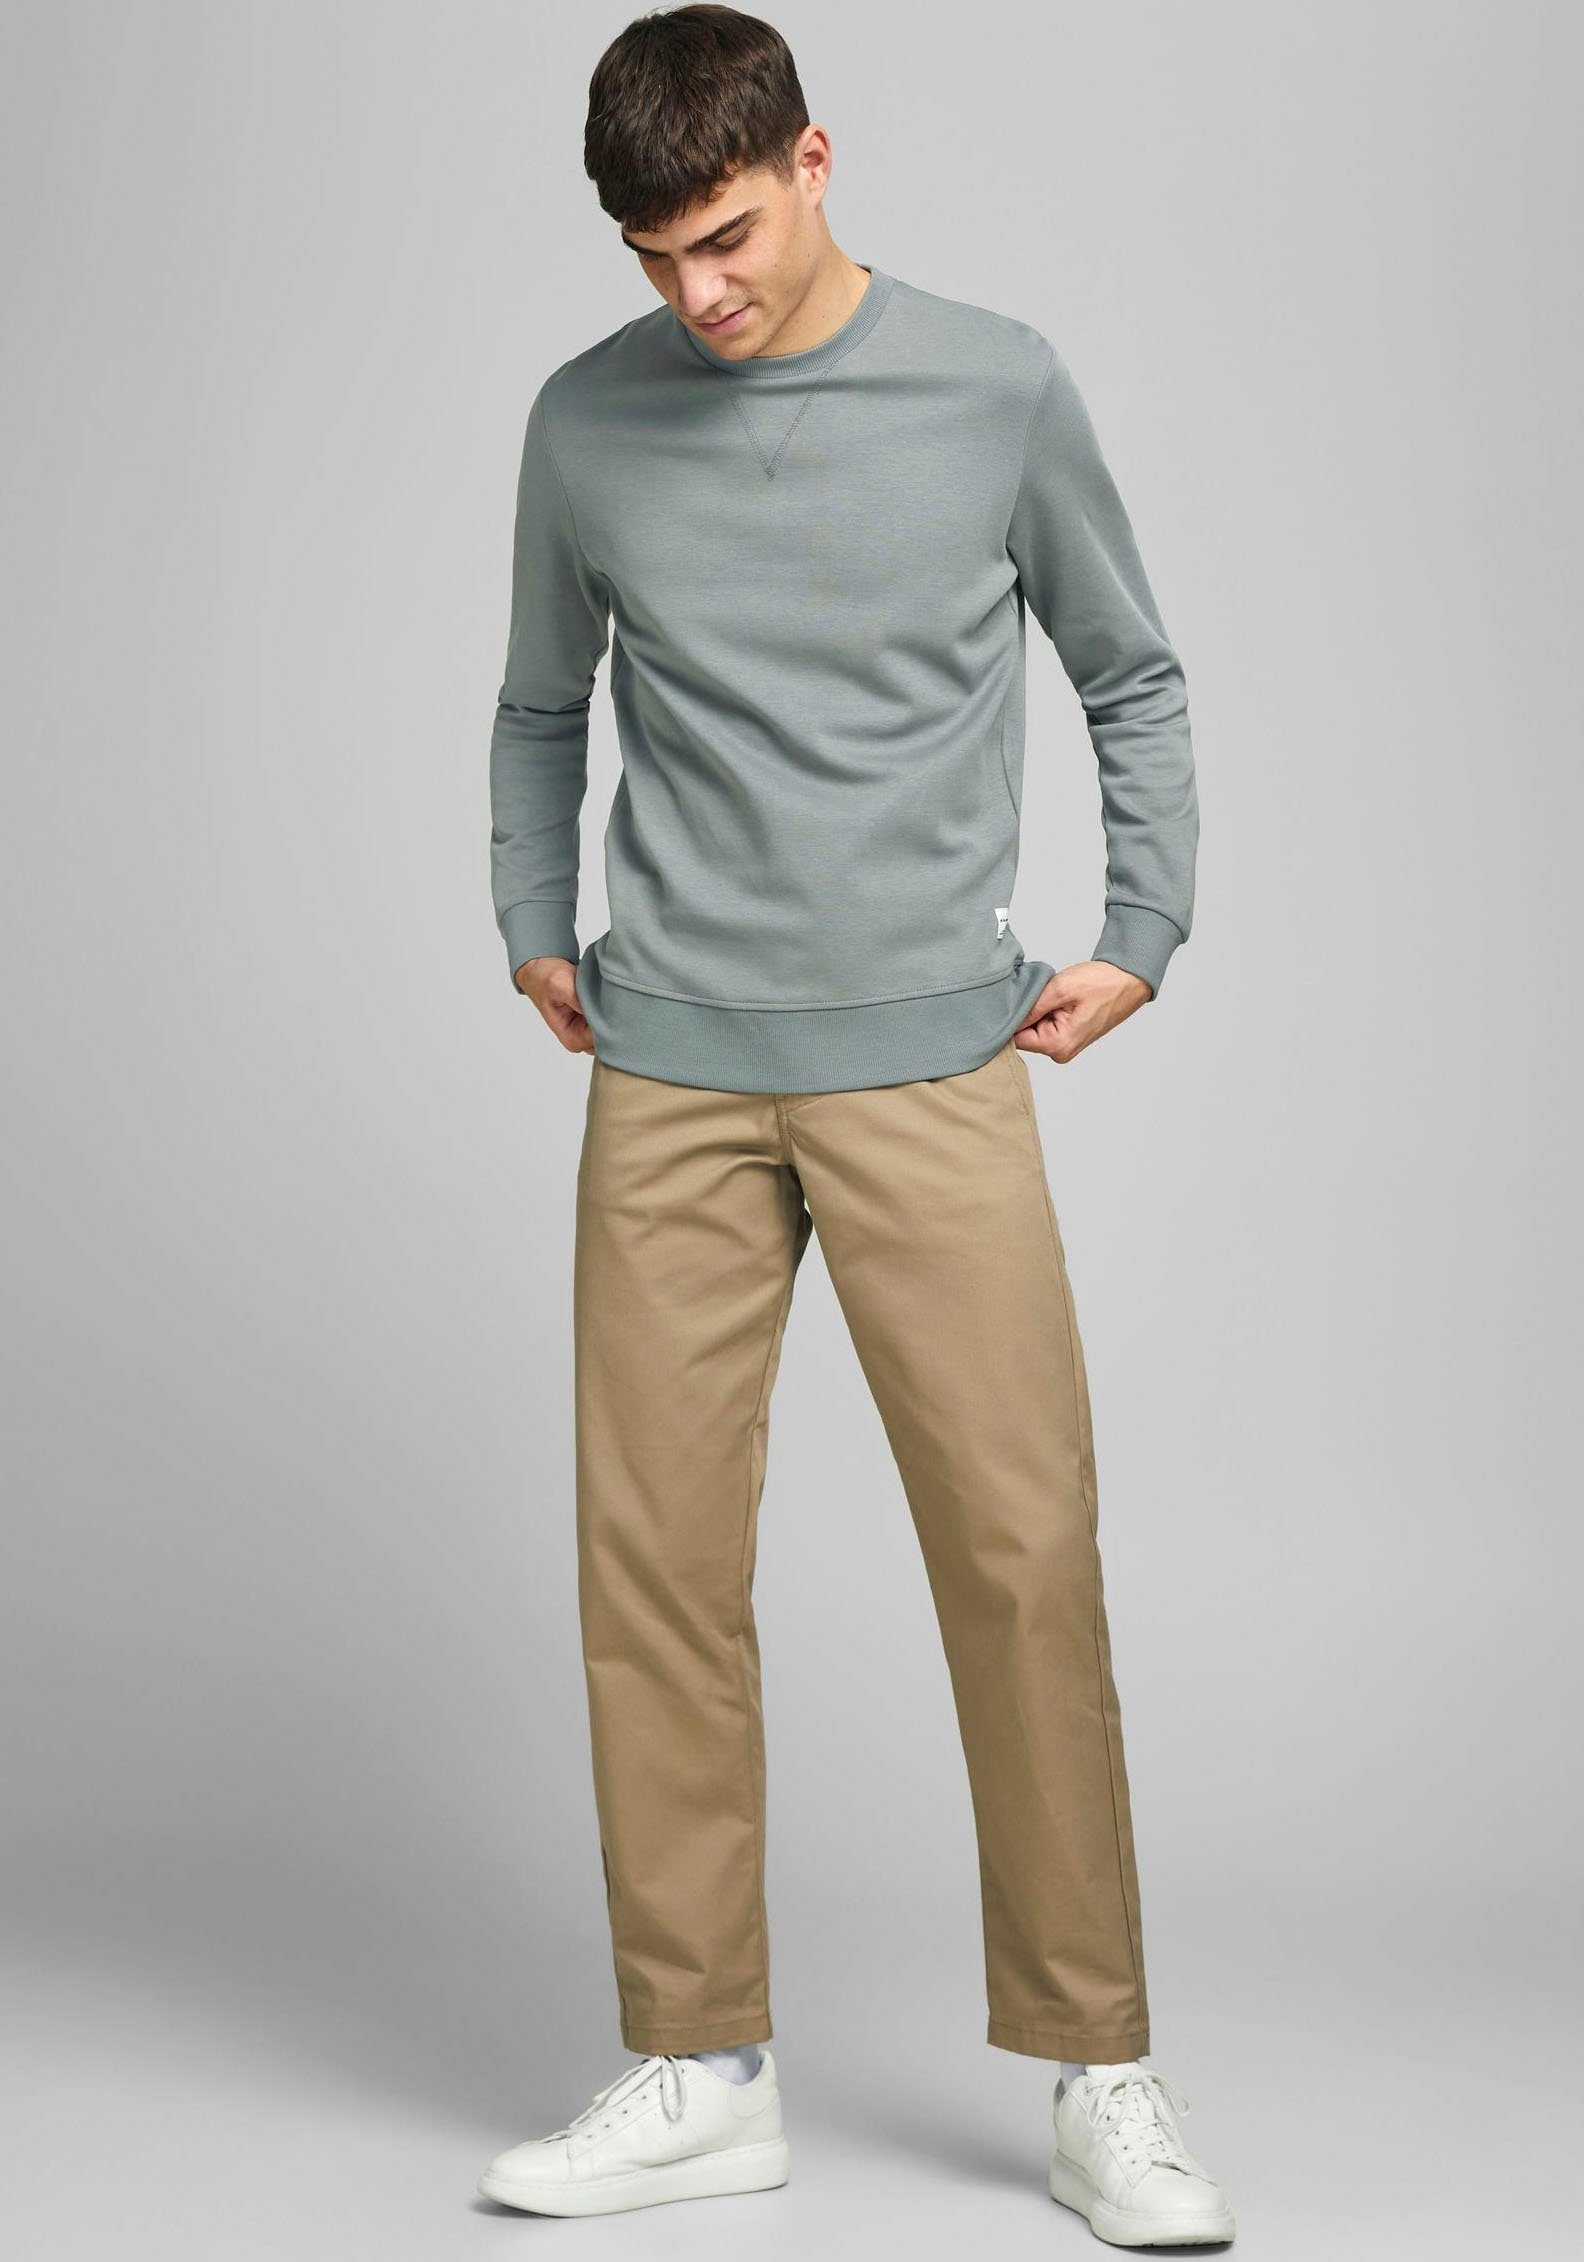 BASIC Sweatshirt Jones graugrün & Jack SWEAT